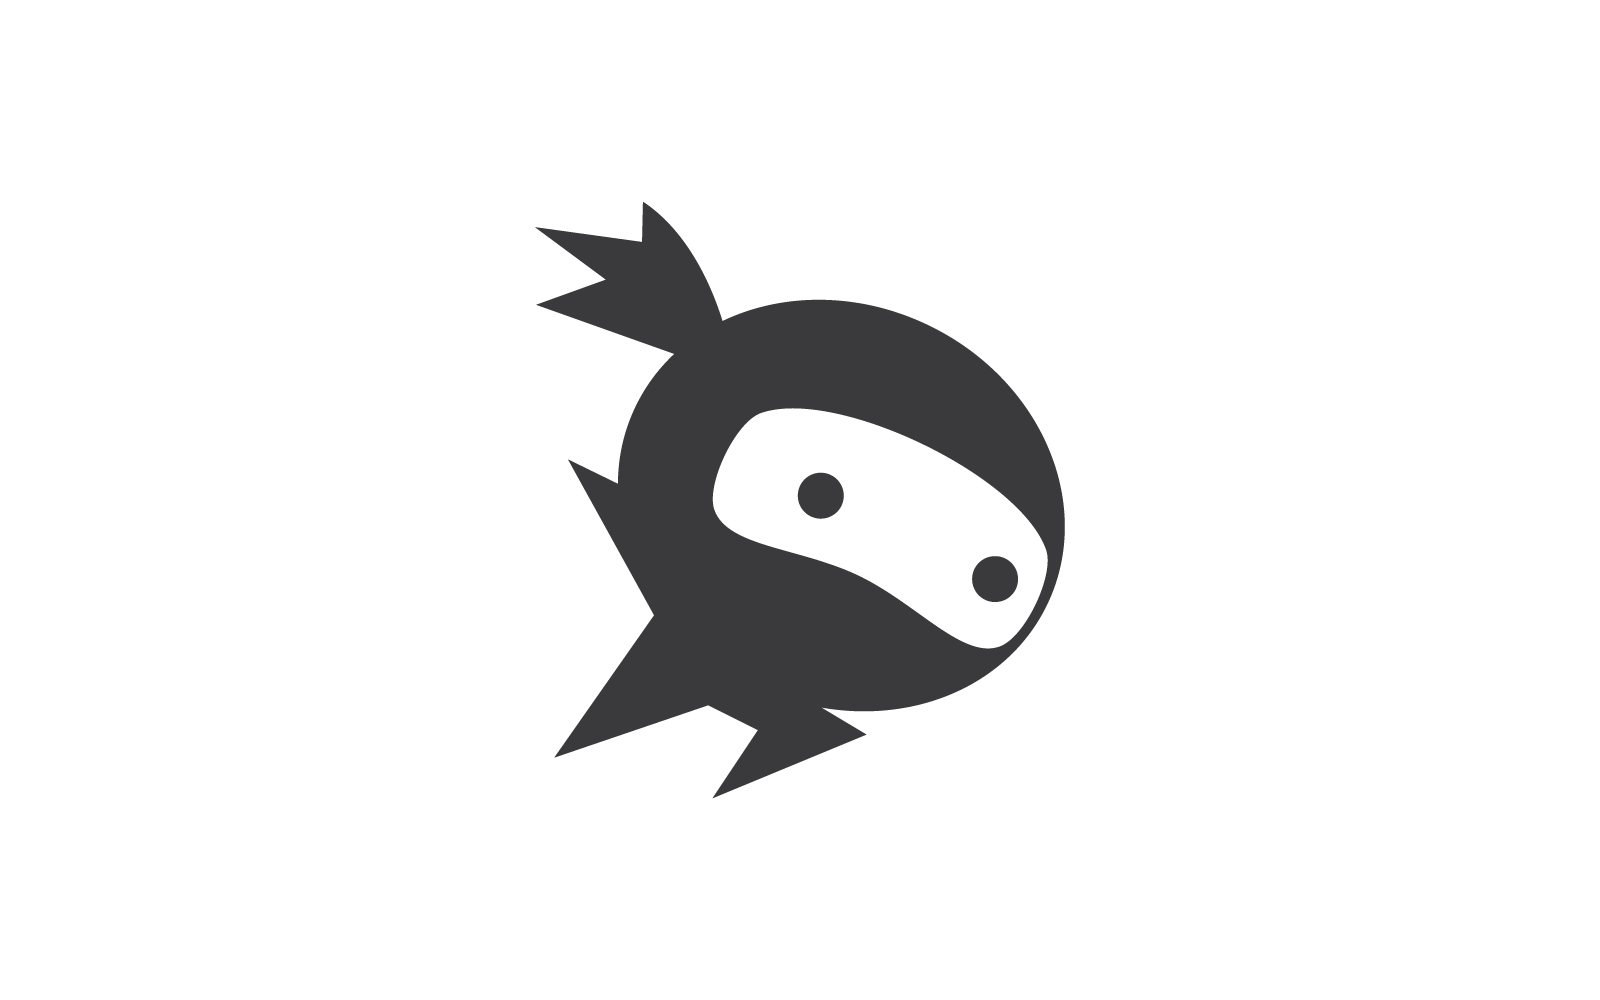 Ninja design illustration logo vector template